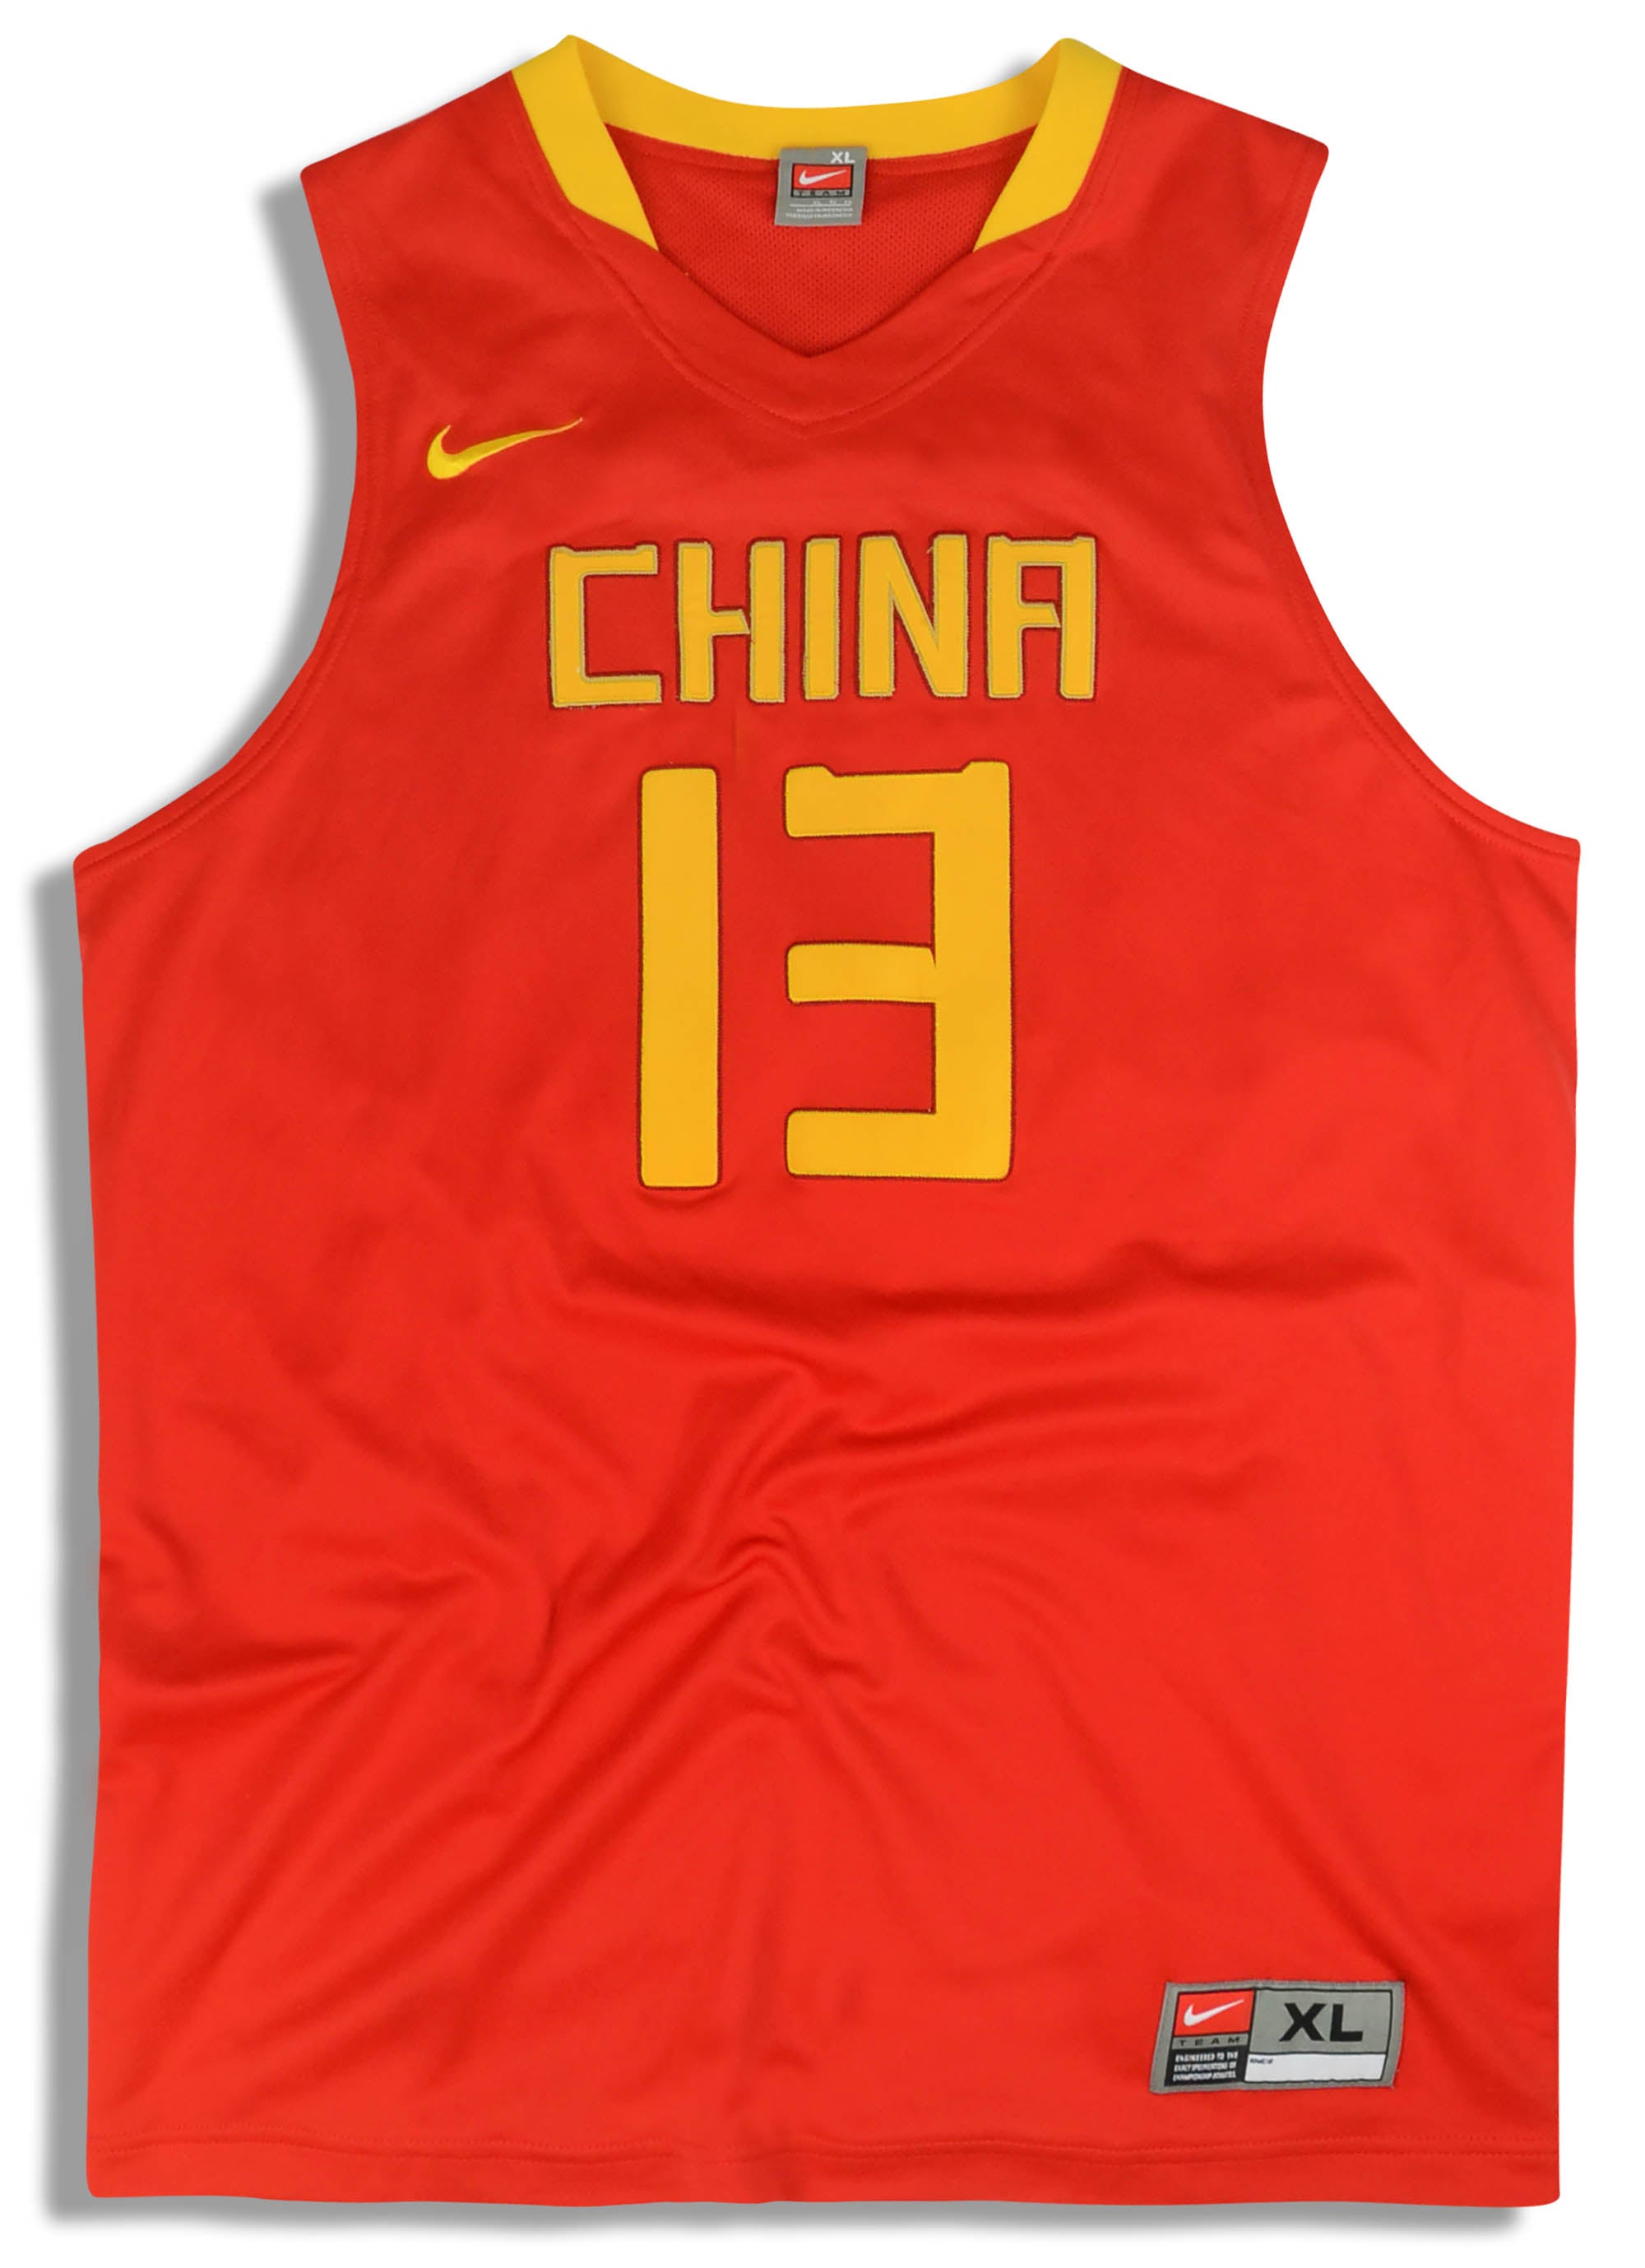 Yao Ming Vintage Reebok Authentic Basketball Jersey